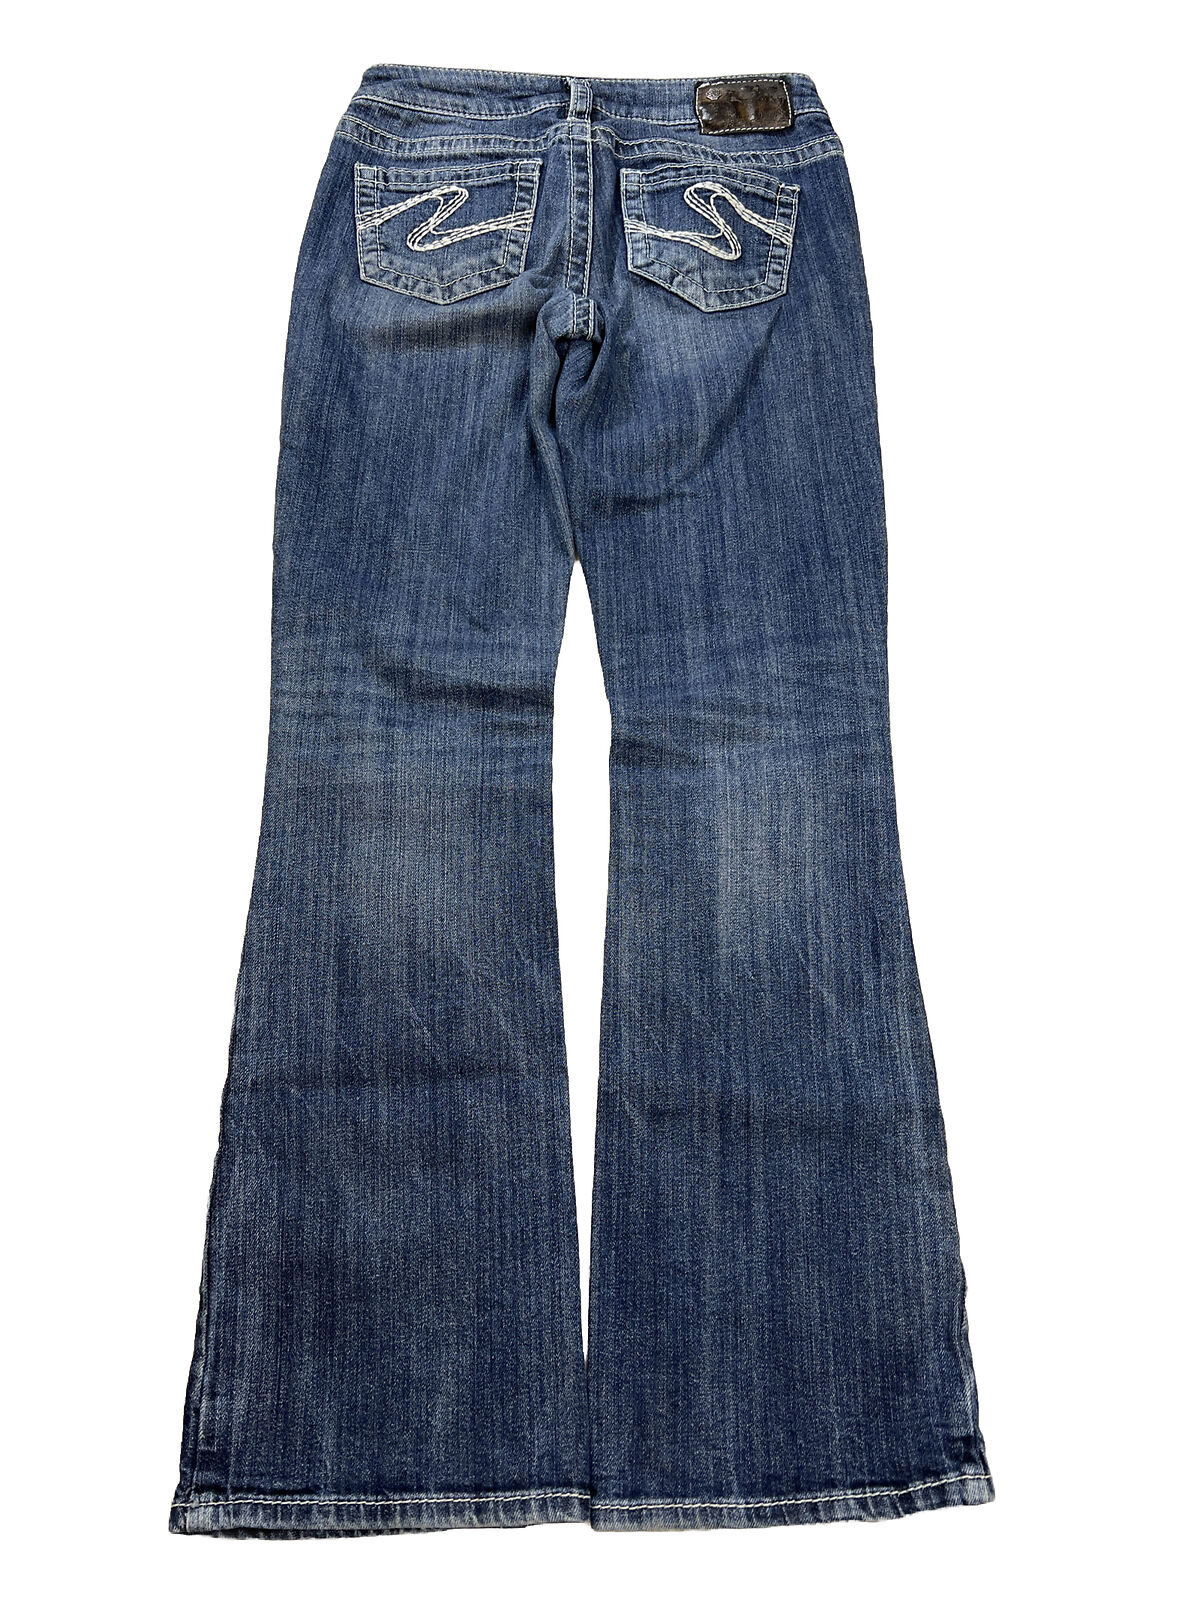 Silver Women's Medium Wash Aiko Boot Cut Jeans - 26x31